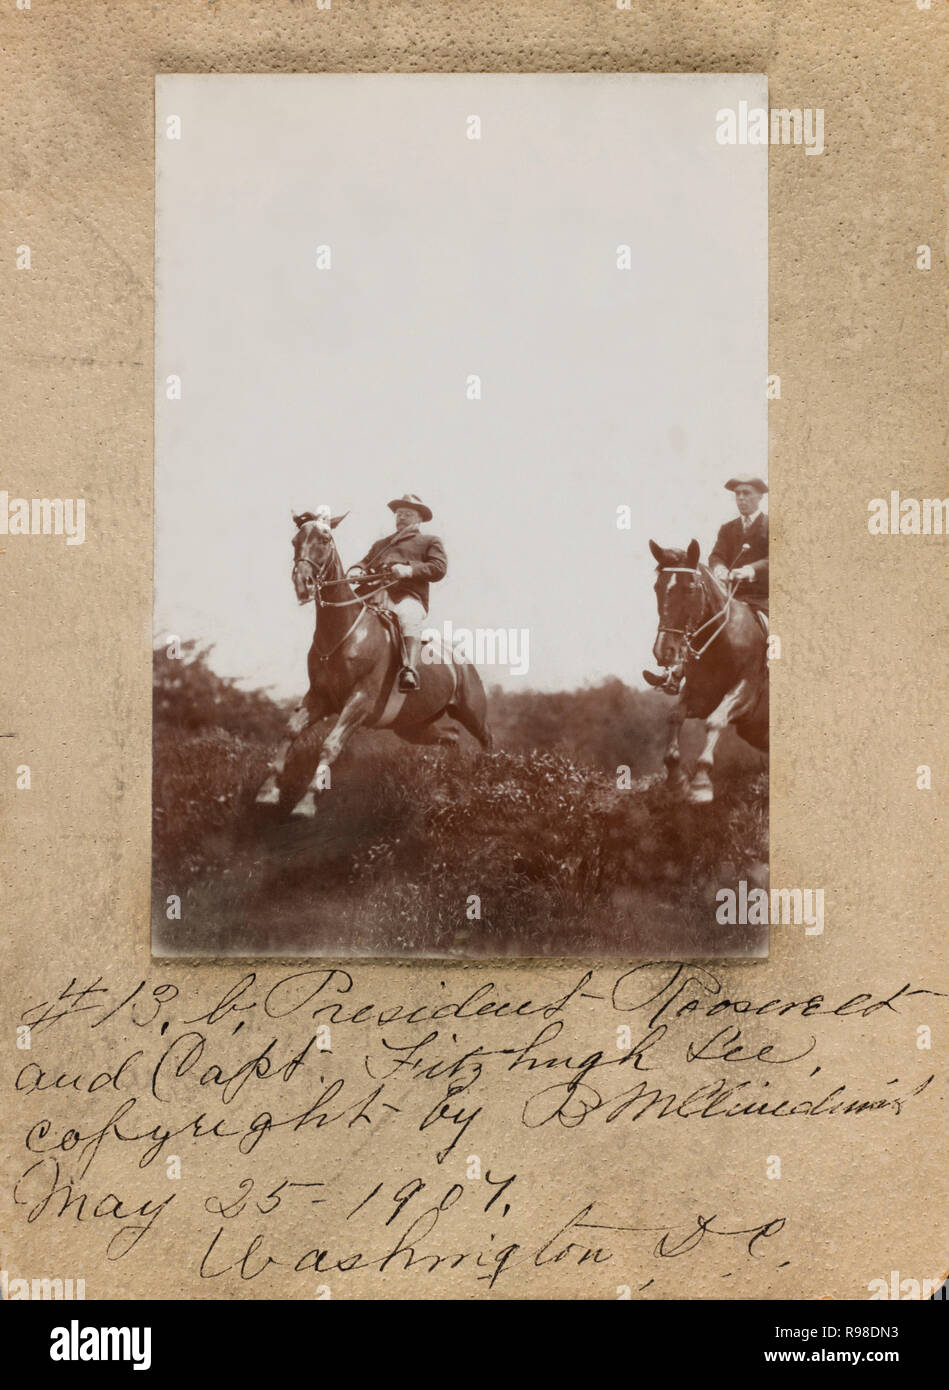 U.S. President Theodore Roosevelt and Captain Fitzhugh Lee Horseback Riding, Jumping over Hedge, Washington DC, USA, by Barnett McFee Clinedinst, May 25, 1907 Stock Photo